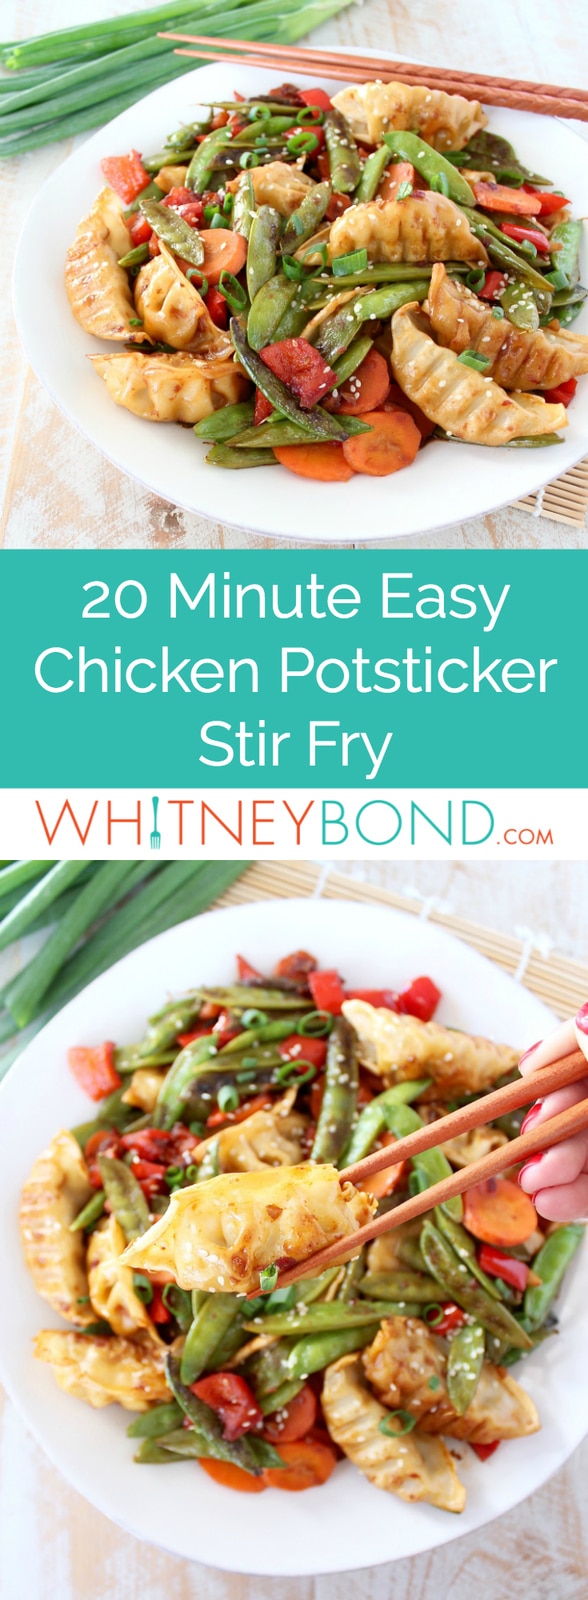 Chicken Potsticker Stir Fry Recipe - WhitneyBond.com